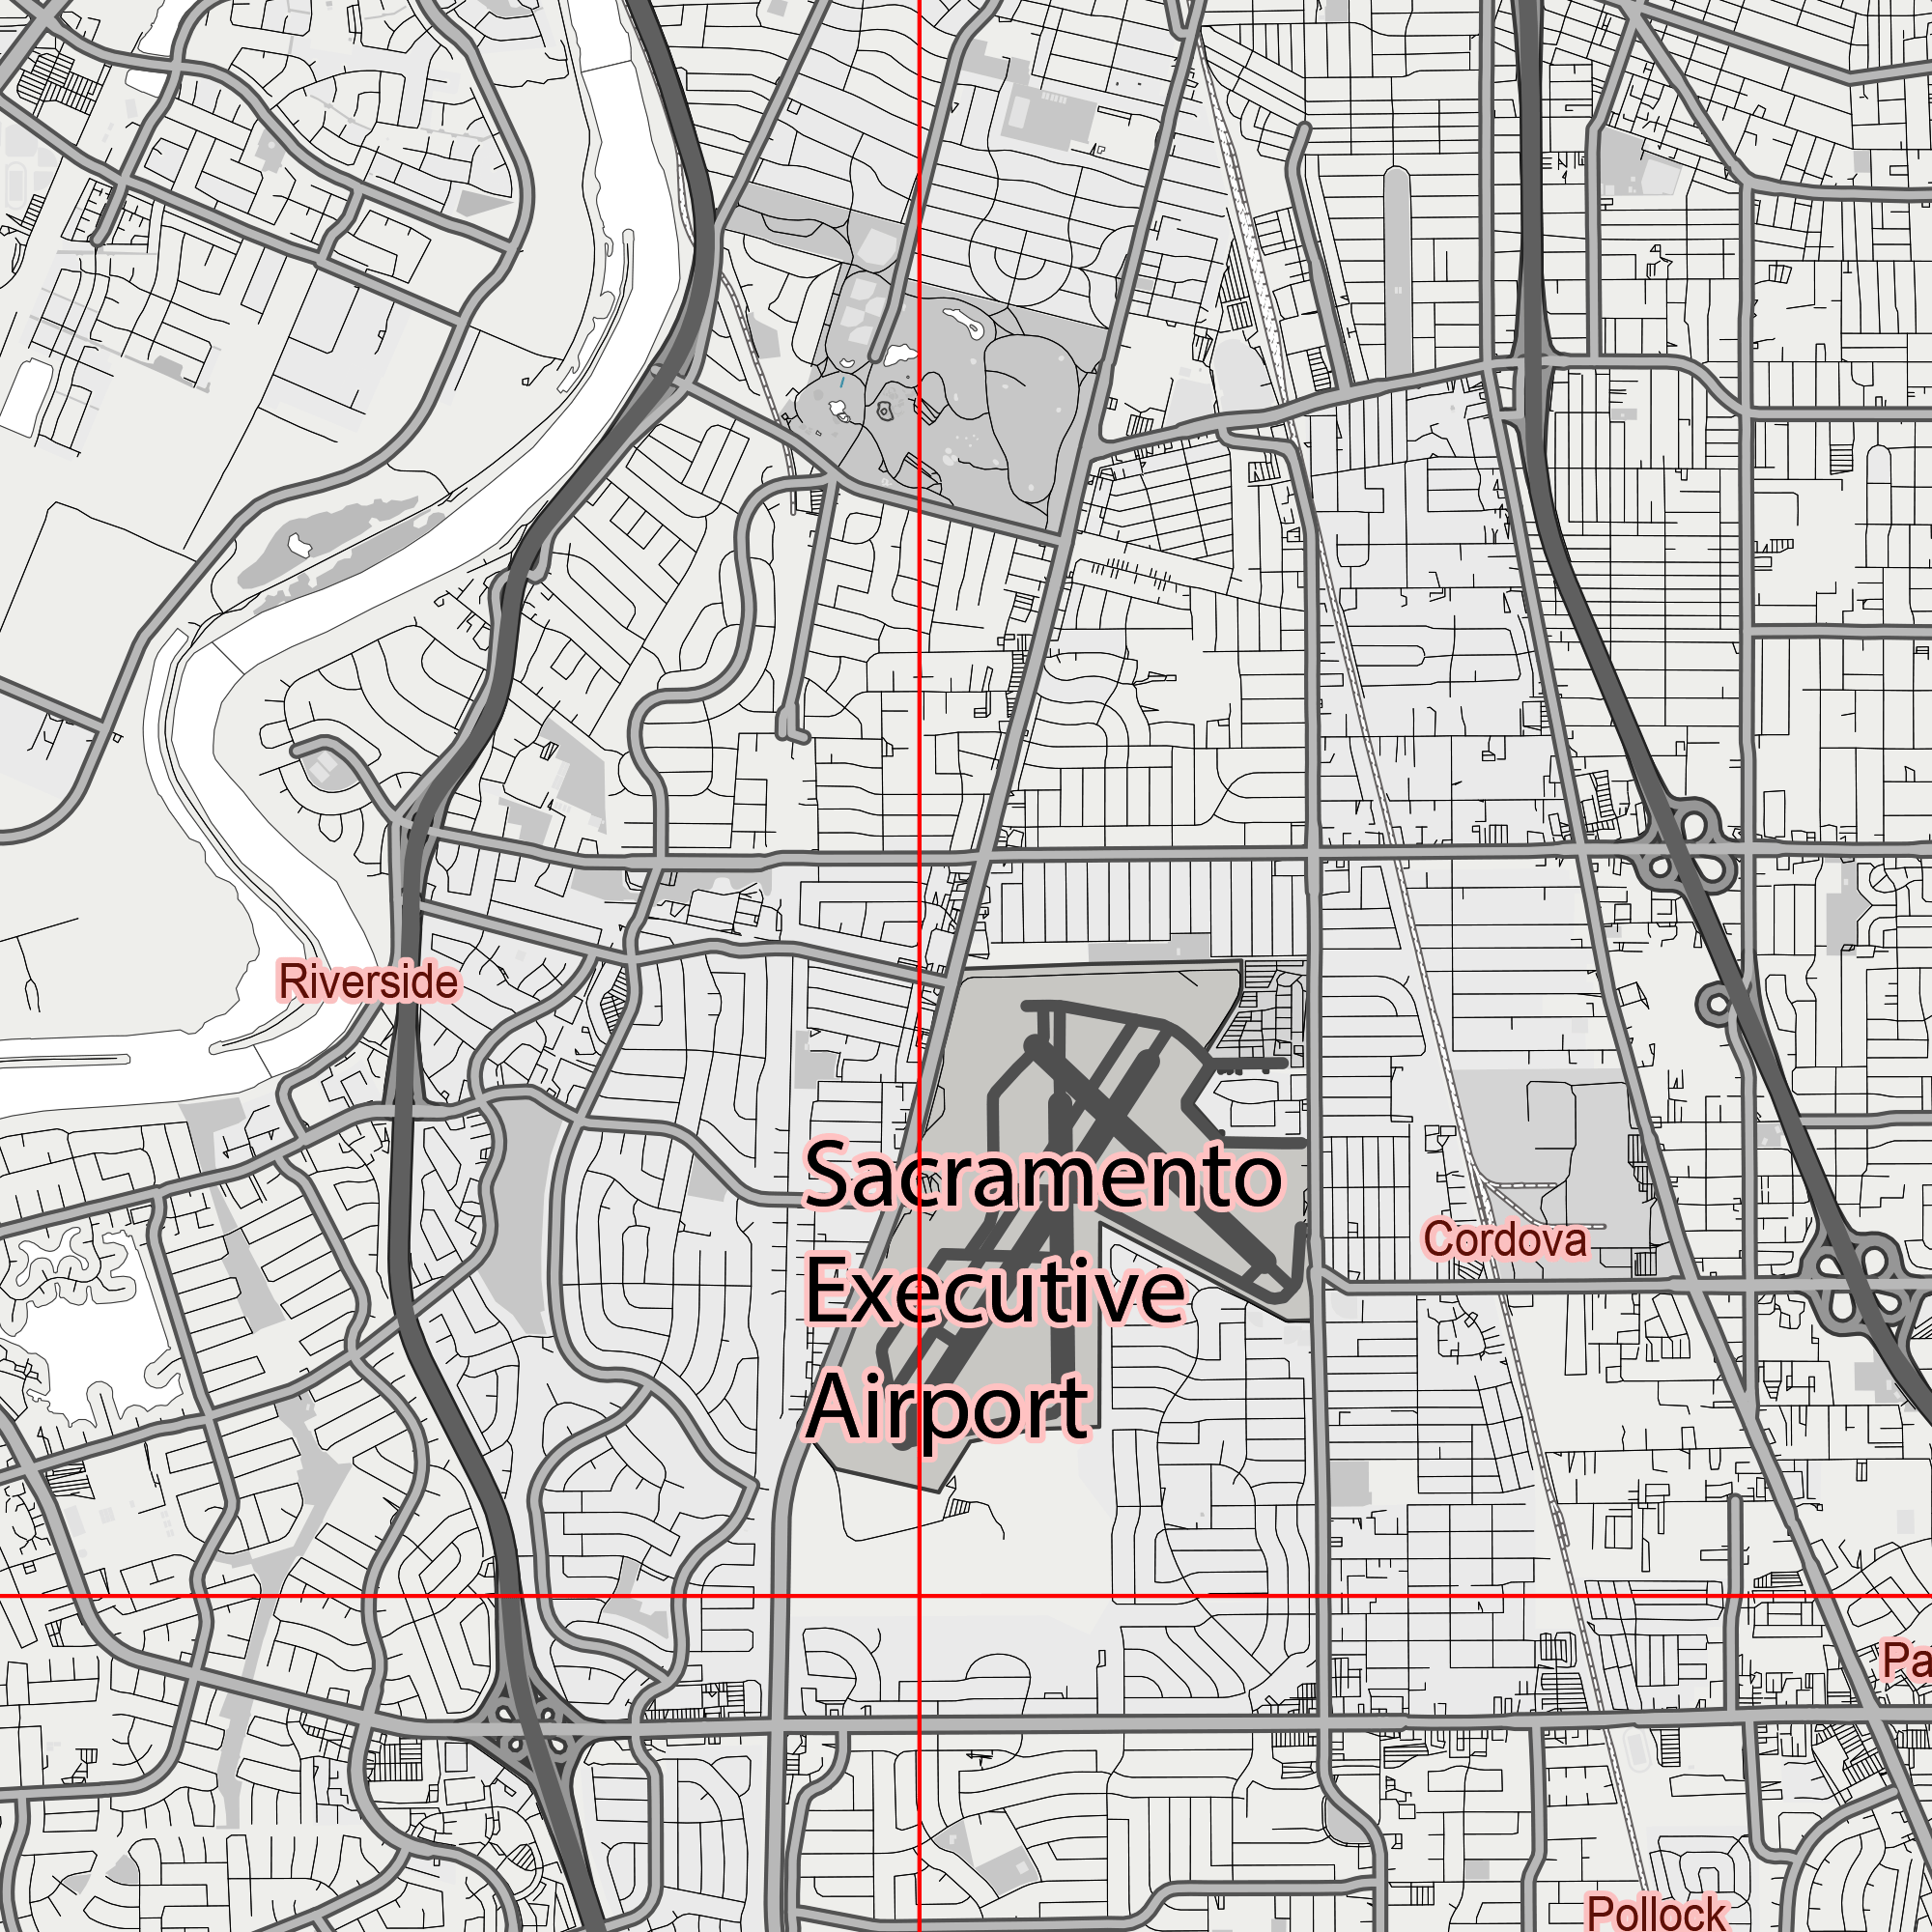 Sacramento California US PDF Vector Map: City Plan Low Detailed (simple white) Street Map editable Adobe PDF in layers